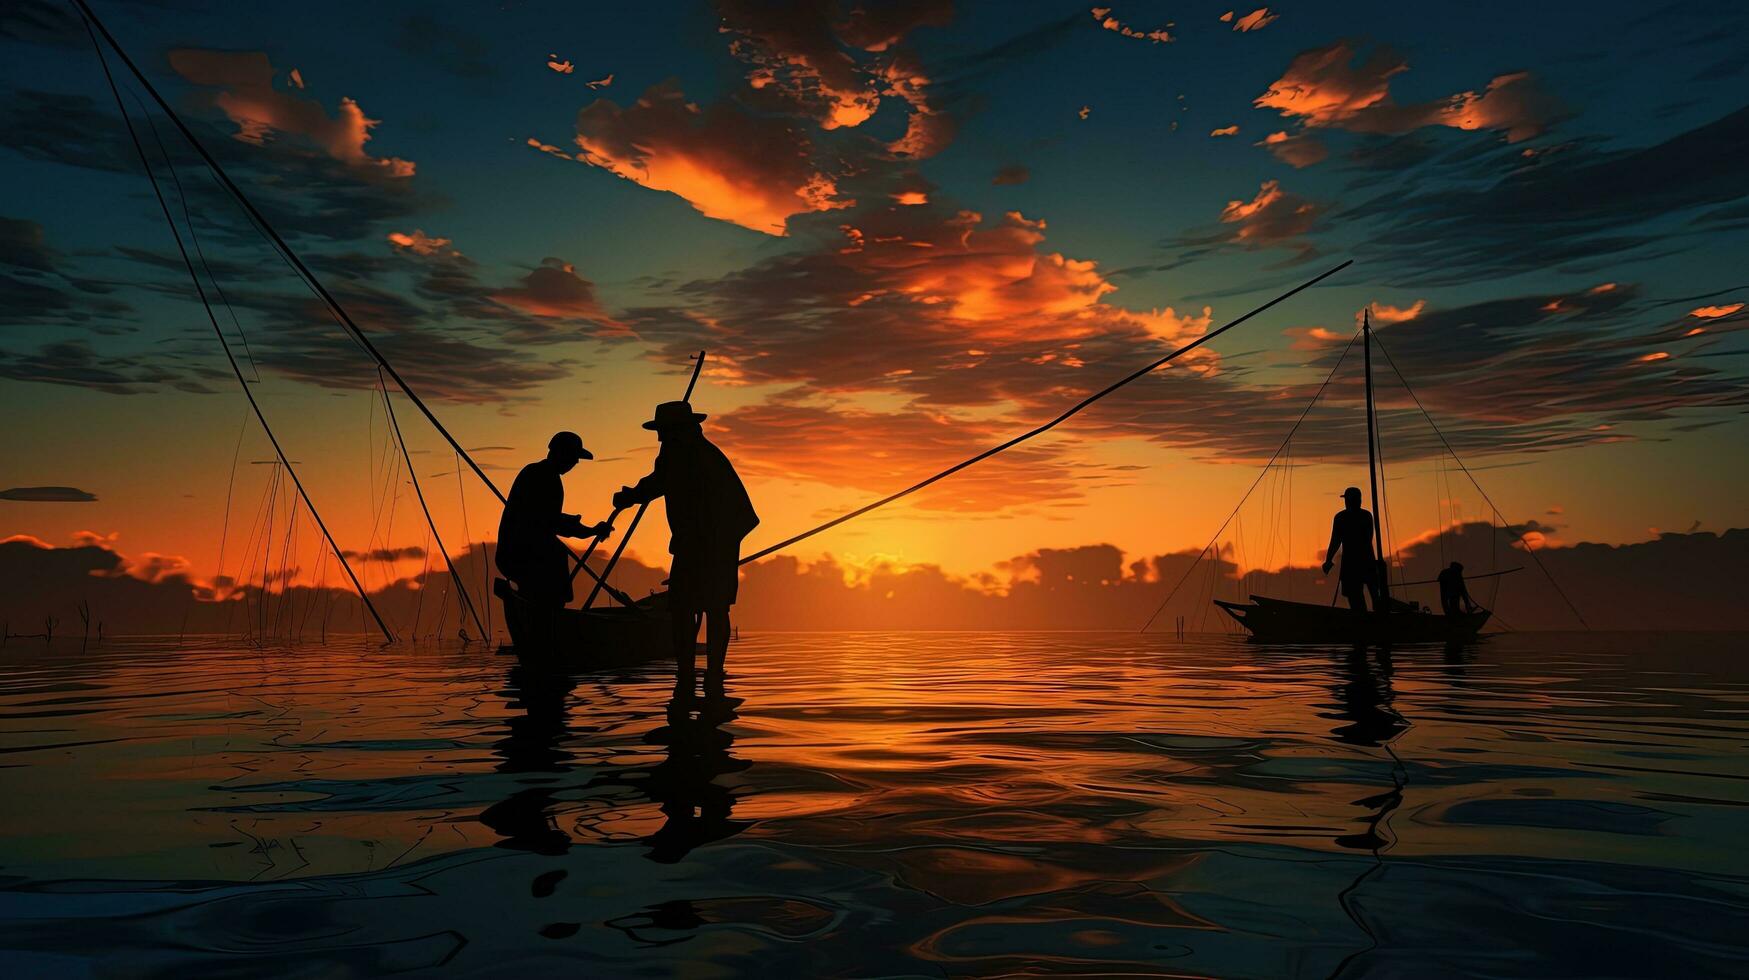 pescadores contornos a amanecer en el zona tropical. silueta concepto foto